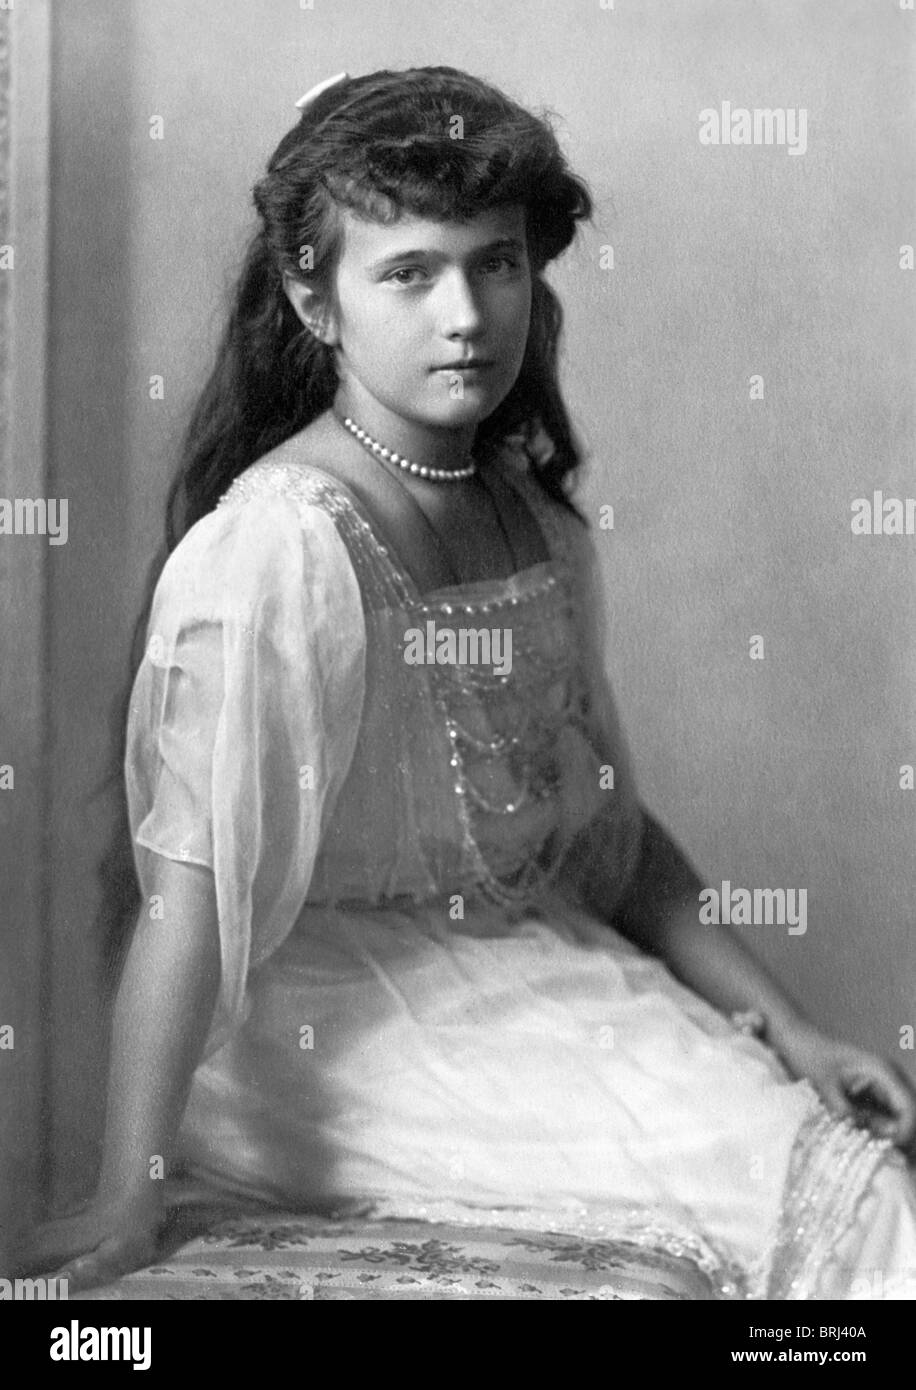 Portrait c1915 of Grand Duchess Anastasia Nikolaevna Romanov (1901 - 1918) - youngest daughter of Tsar Nicholas II of Russia. Stock Photo